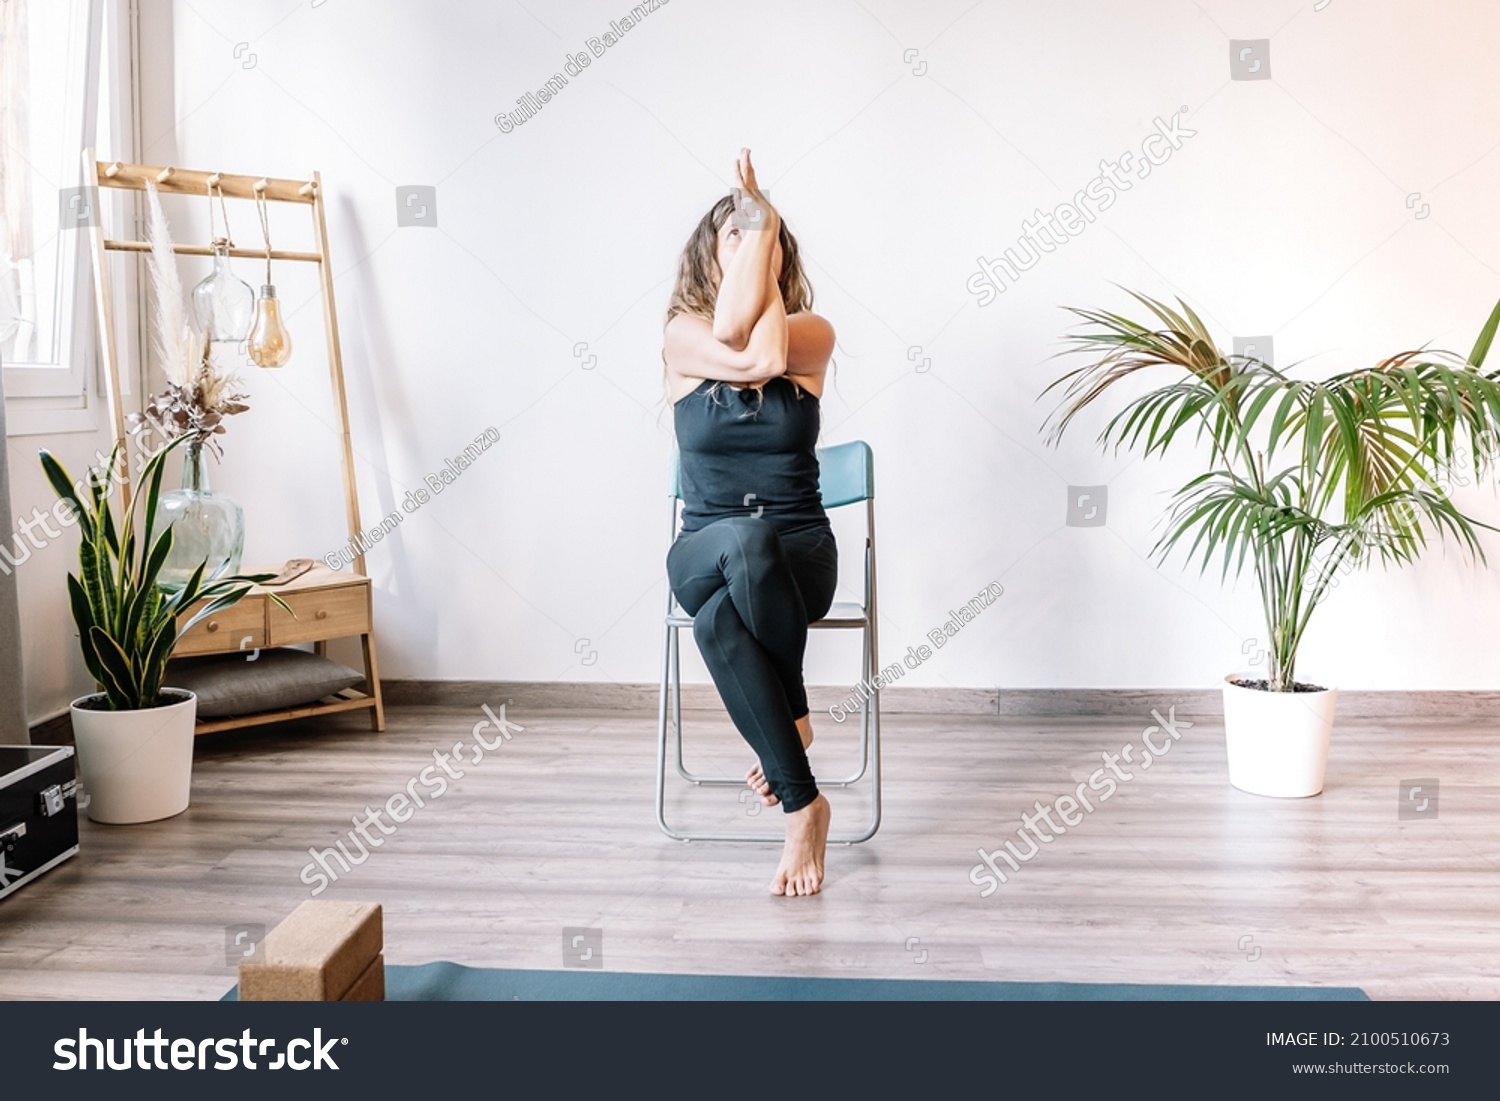 Woman doing Eagle pose on chair #2100510673